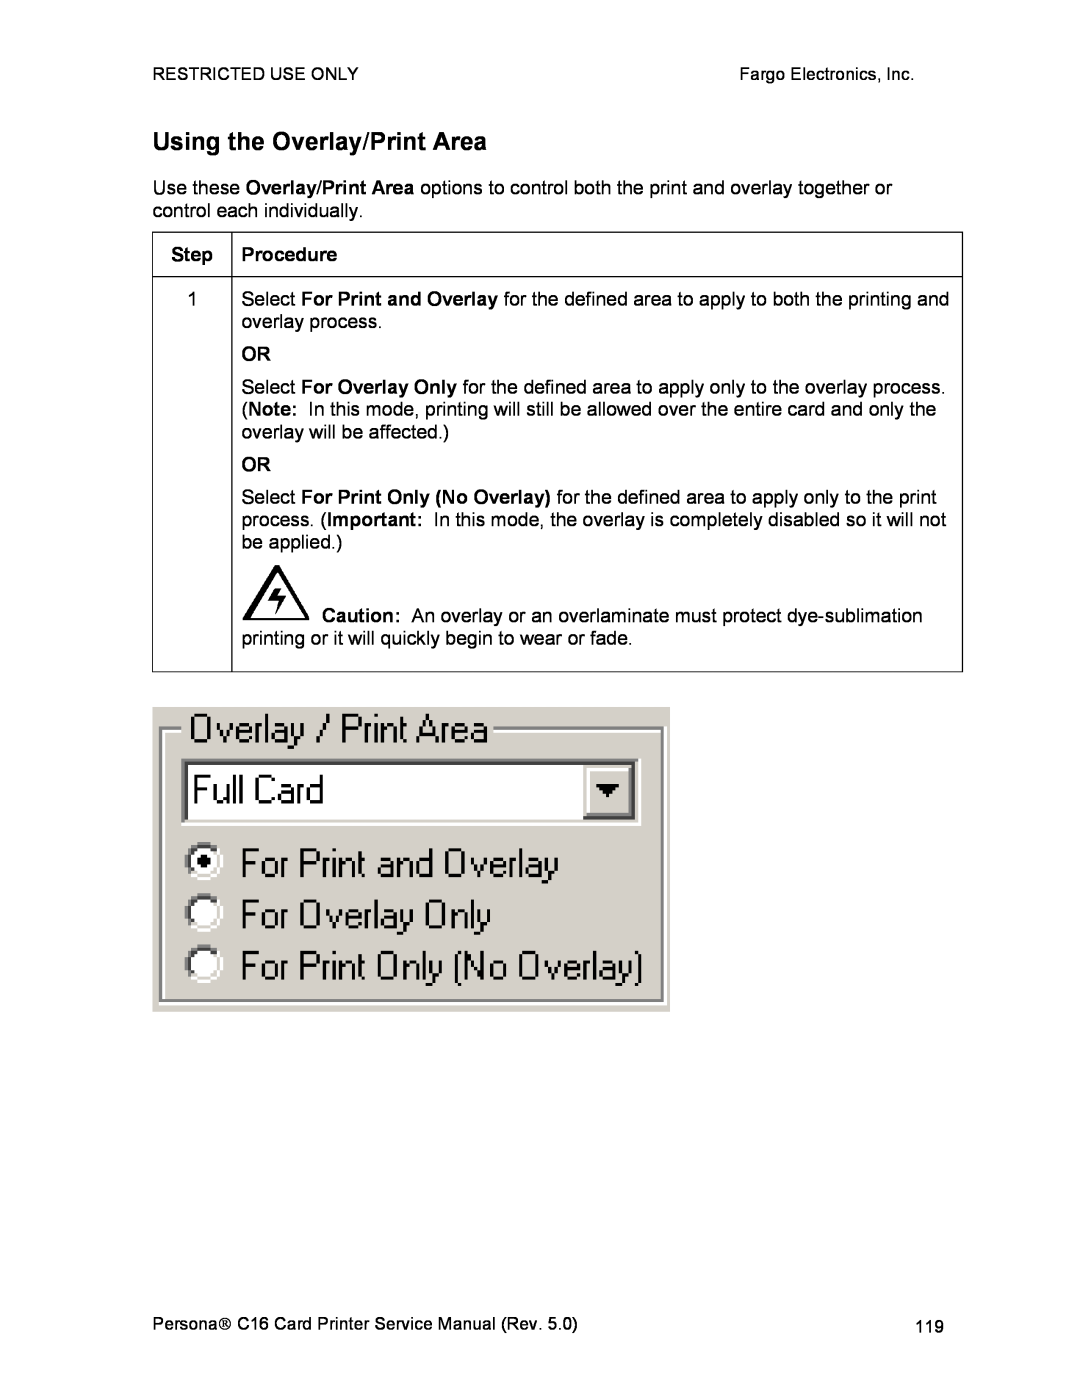 FARGO electronic C16 service manual Using the Overlay/Print Area 